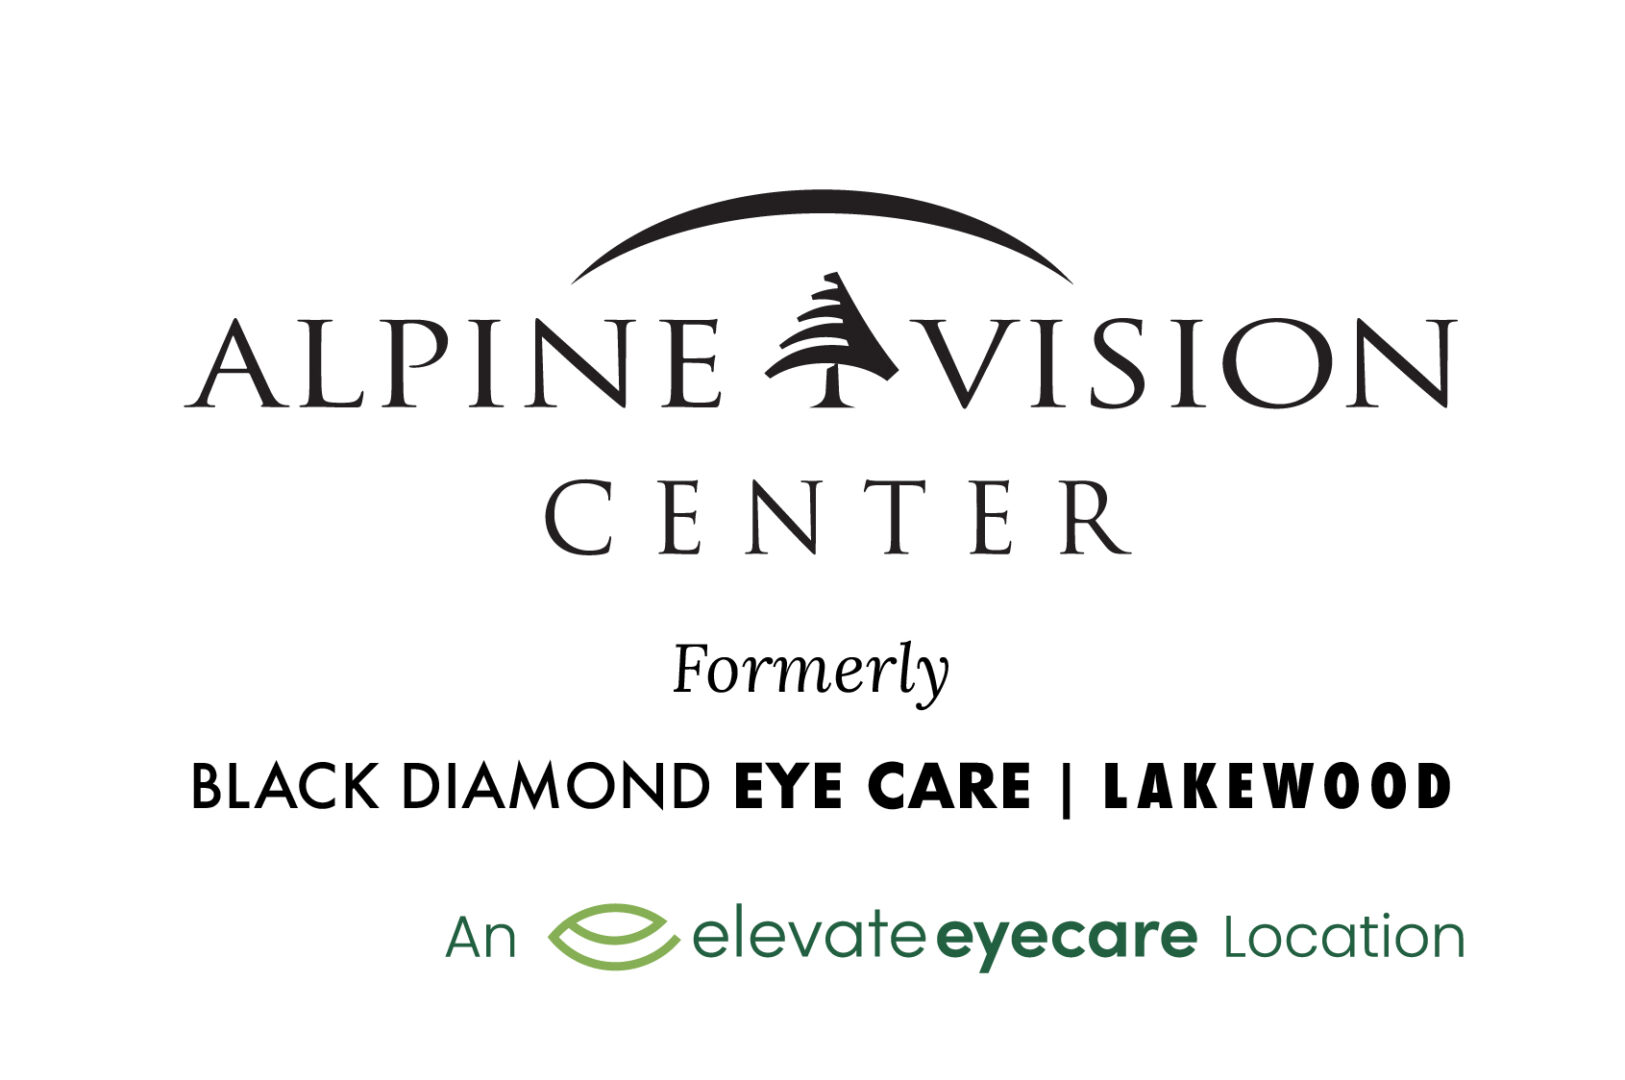 Alpine Vision Center logo formerly Black Diamond Eye Care Lakewood